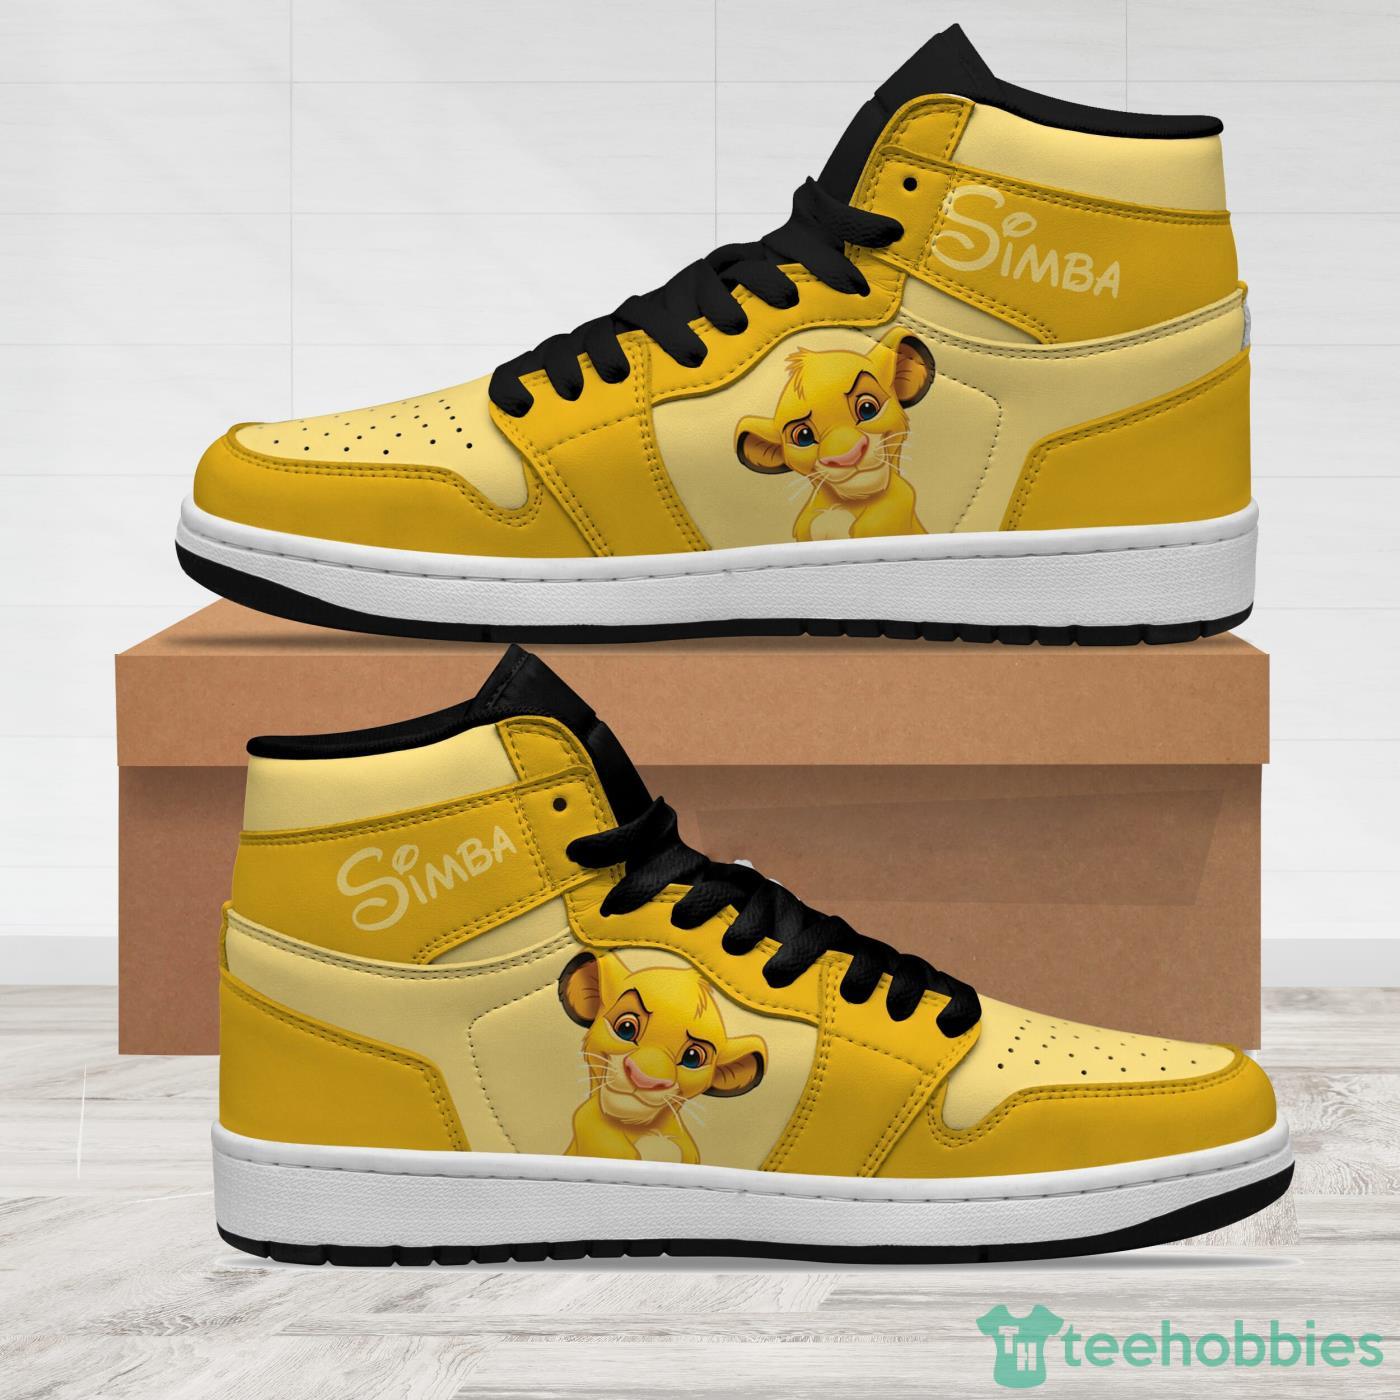 Simba Lion King Yellow Sneaker Boots Disney Air Jordan Hightop Shoes Product Photo 1